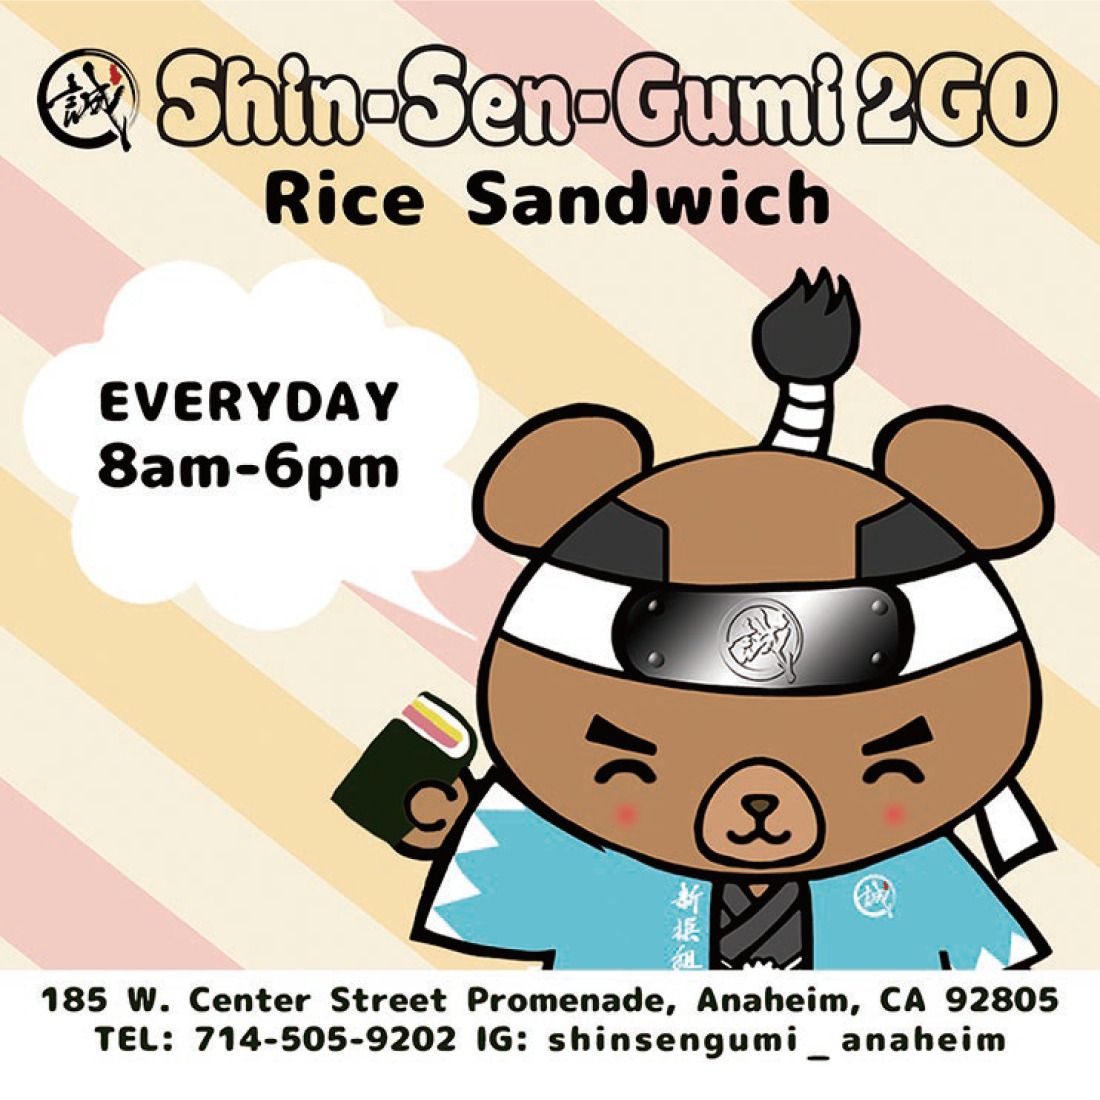 Shin-Sen-Gumi 2GO Rice Sandwich EVERYDAY 8am~6pm. Bear has a rice sandwich on the pink & yellow background.